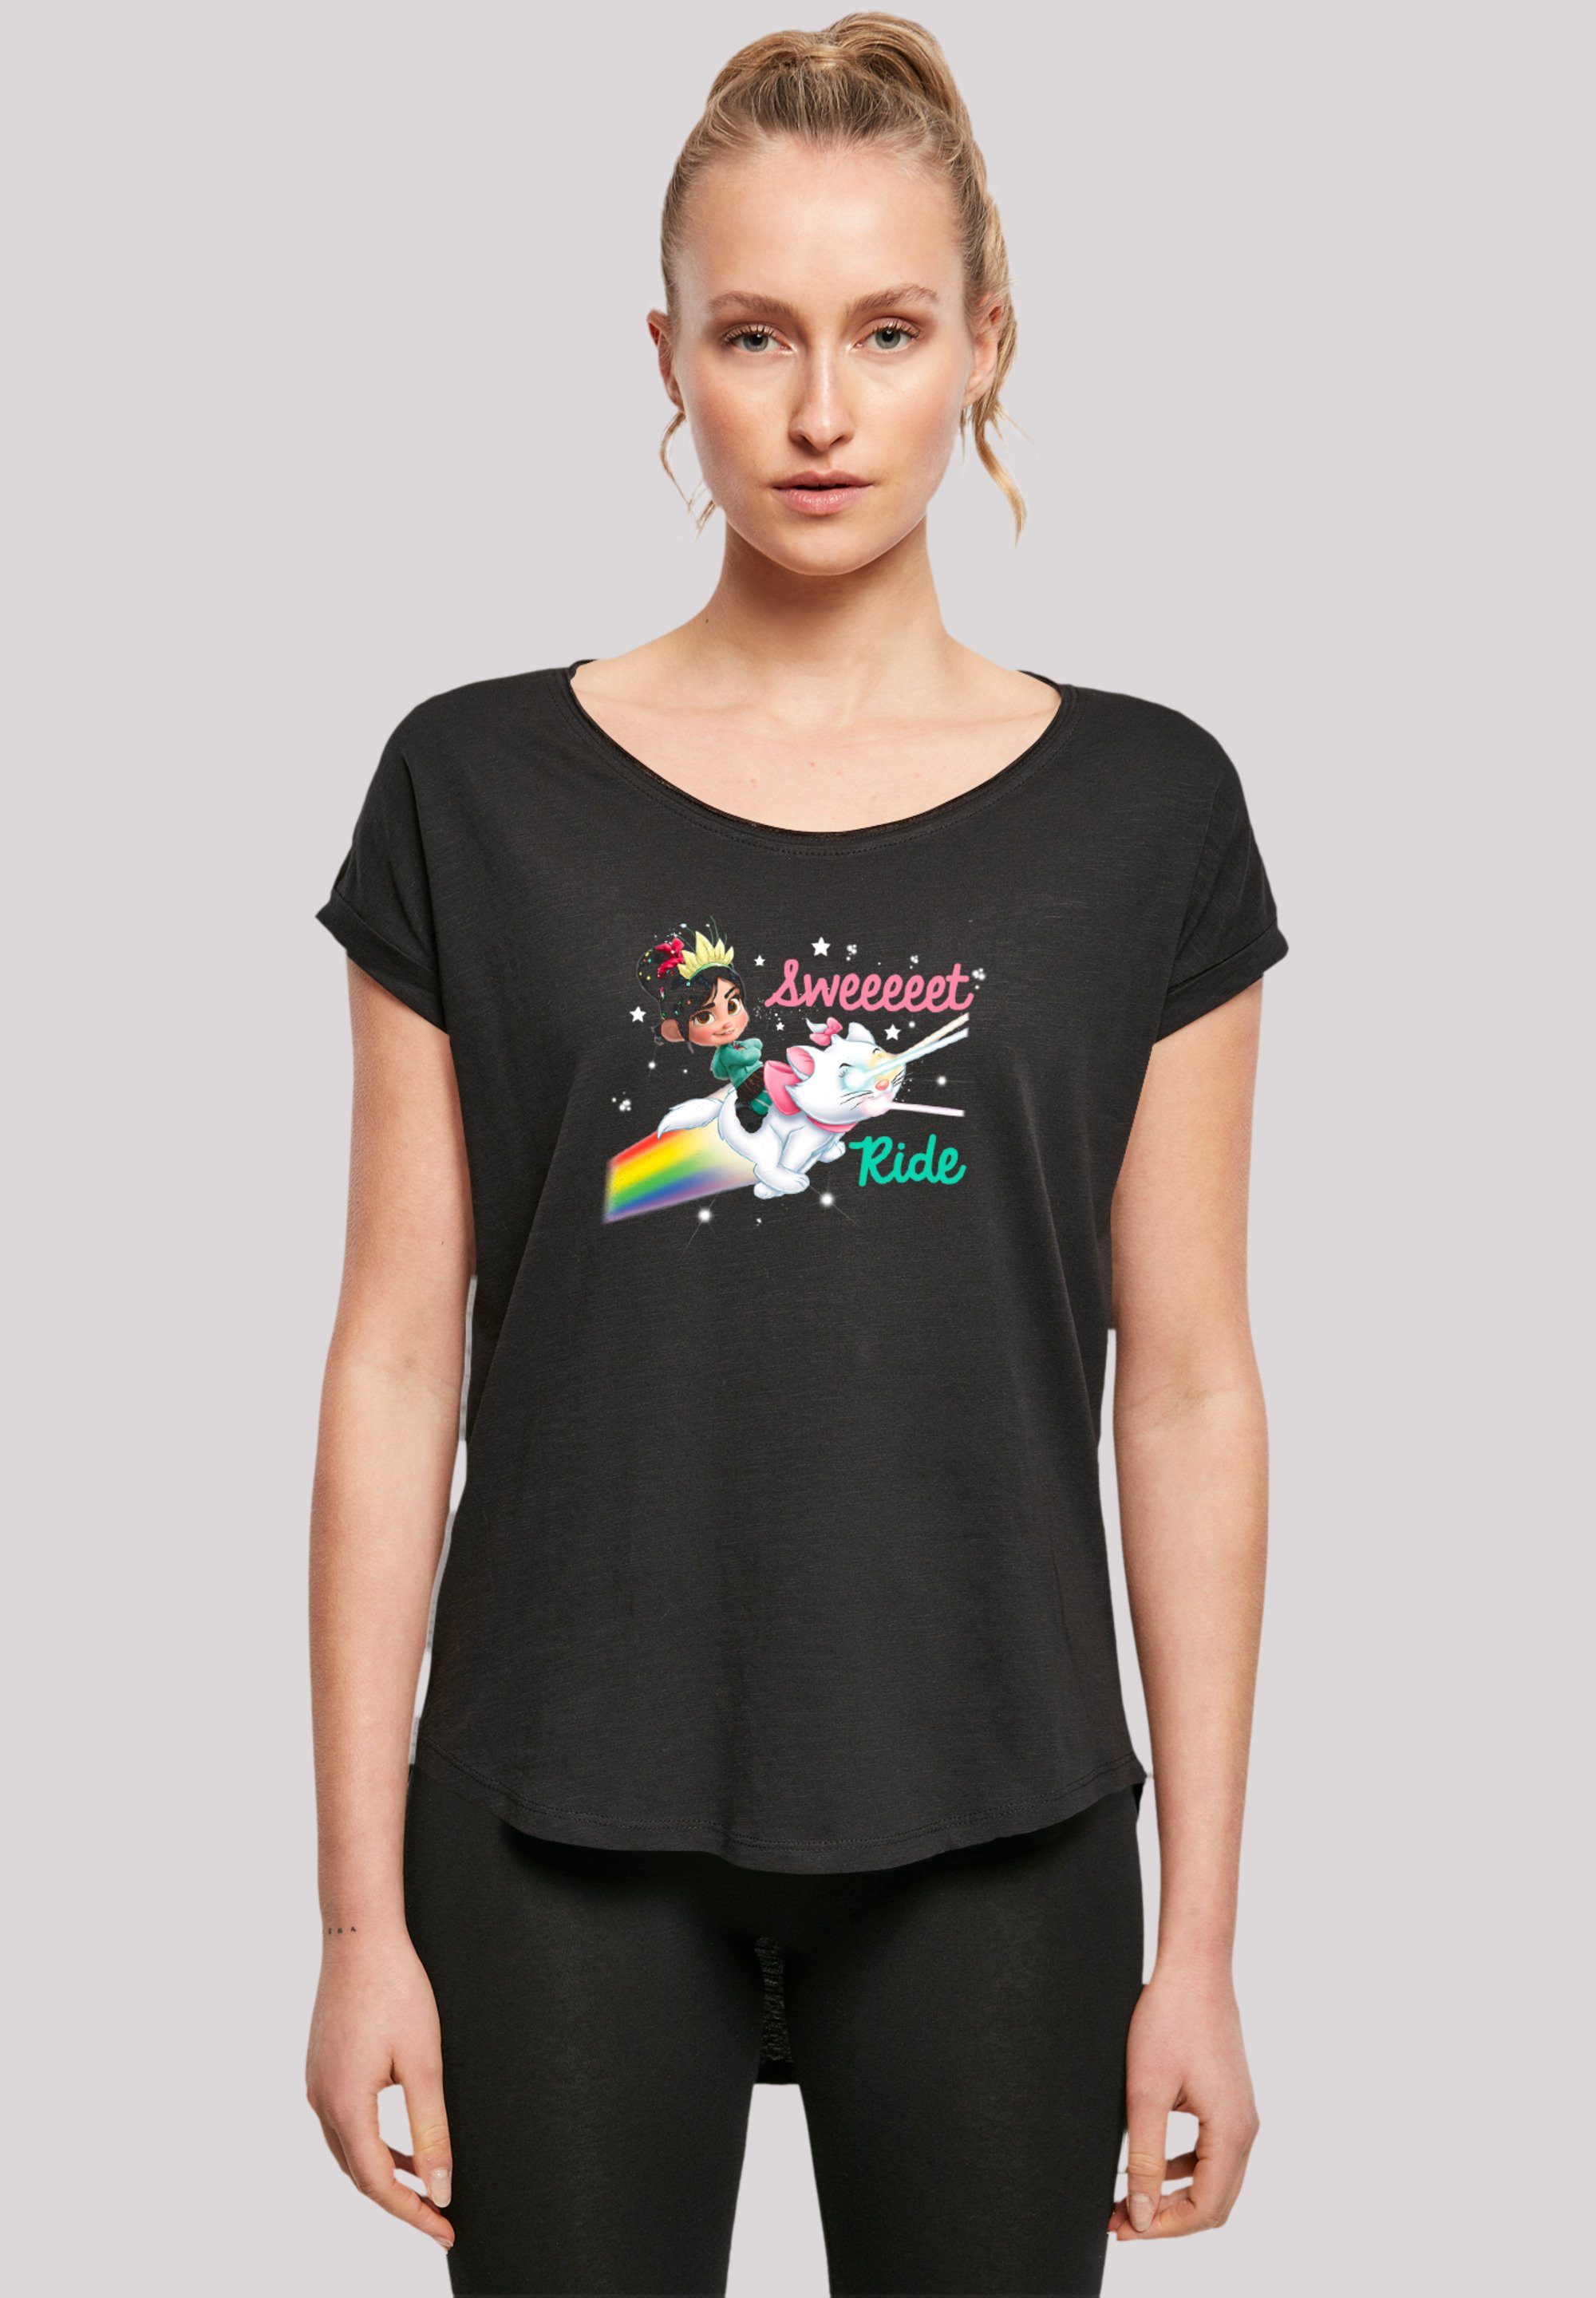 Wreck-It Disney Qualität T-Shirt Sweet Ride Ralph Premium Reichts F4NT4STIC